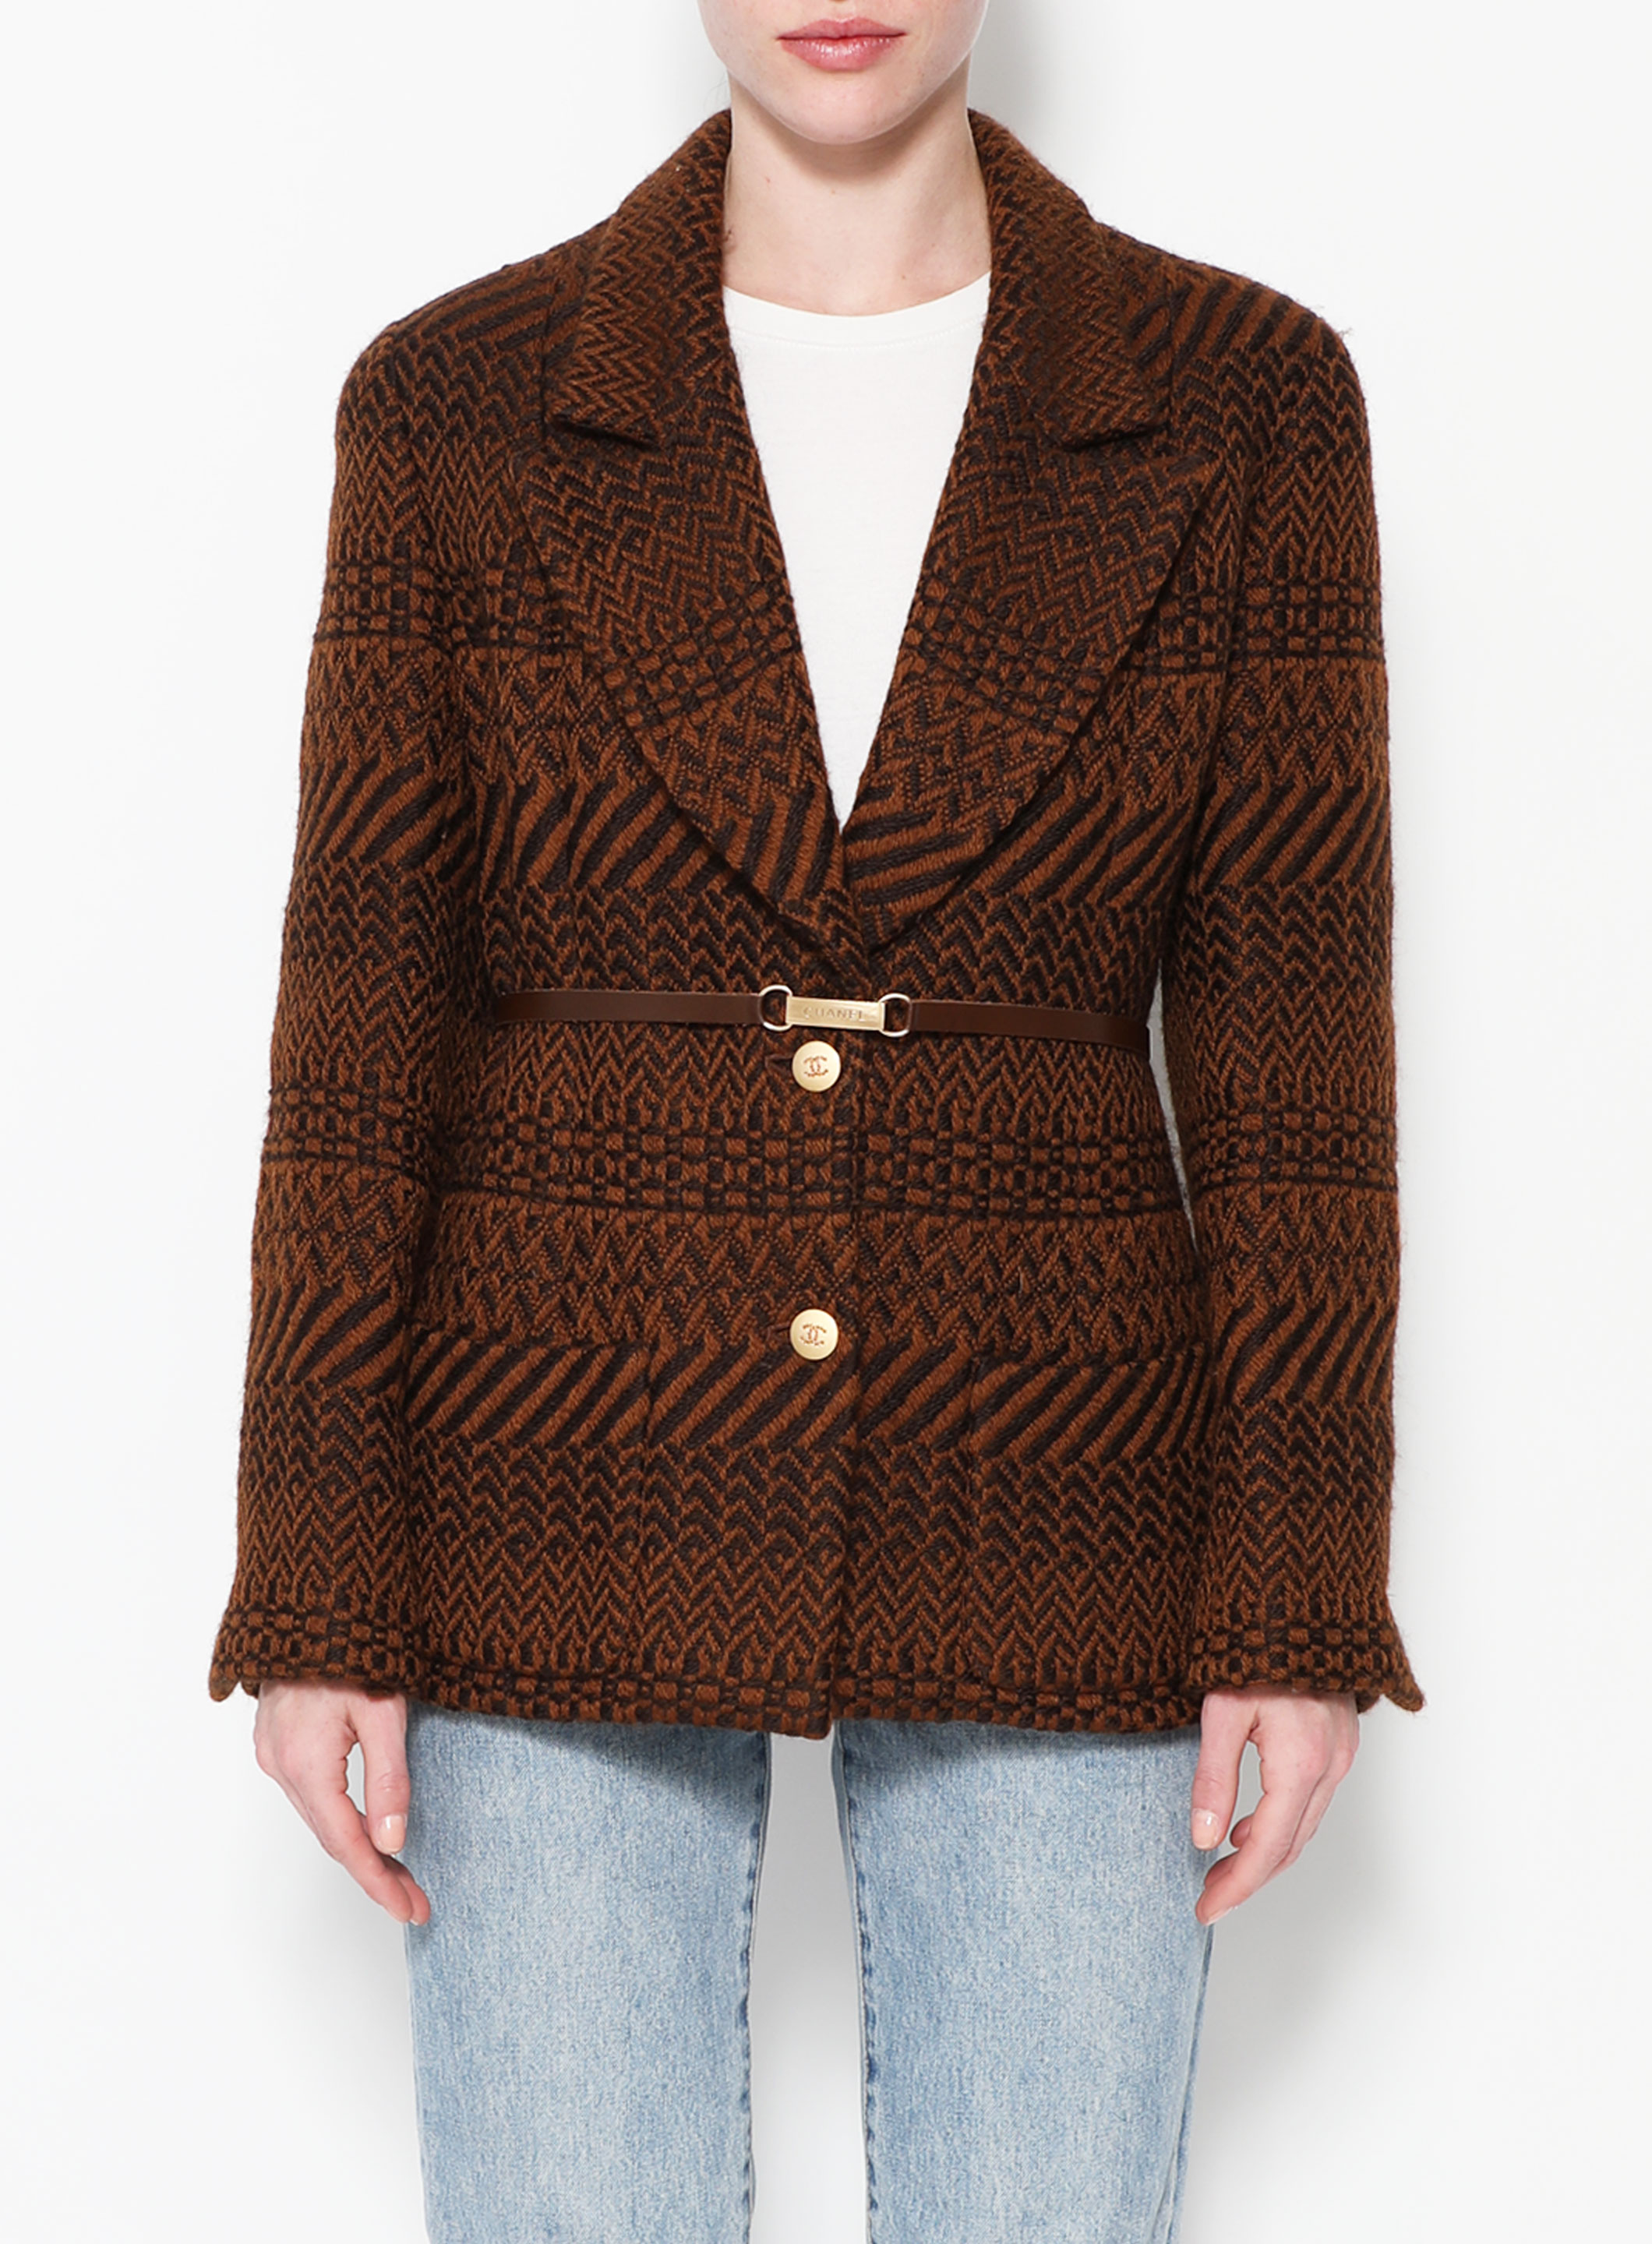 LOUIS VUITTON Wool Jacket 40 Beige Authentic Women Used from Japan